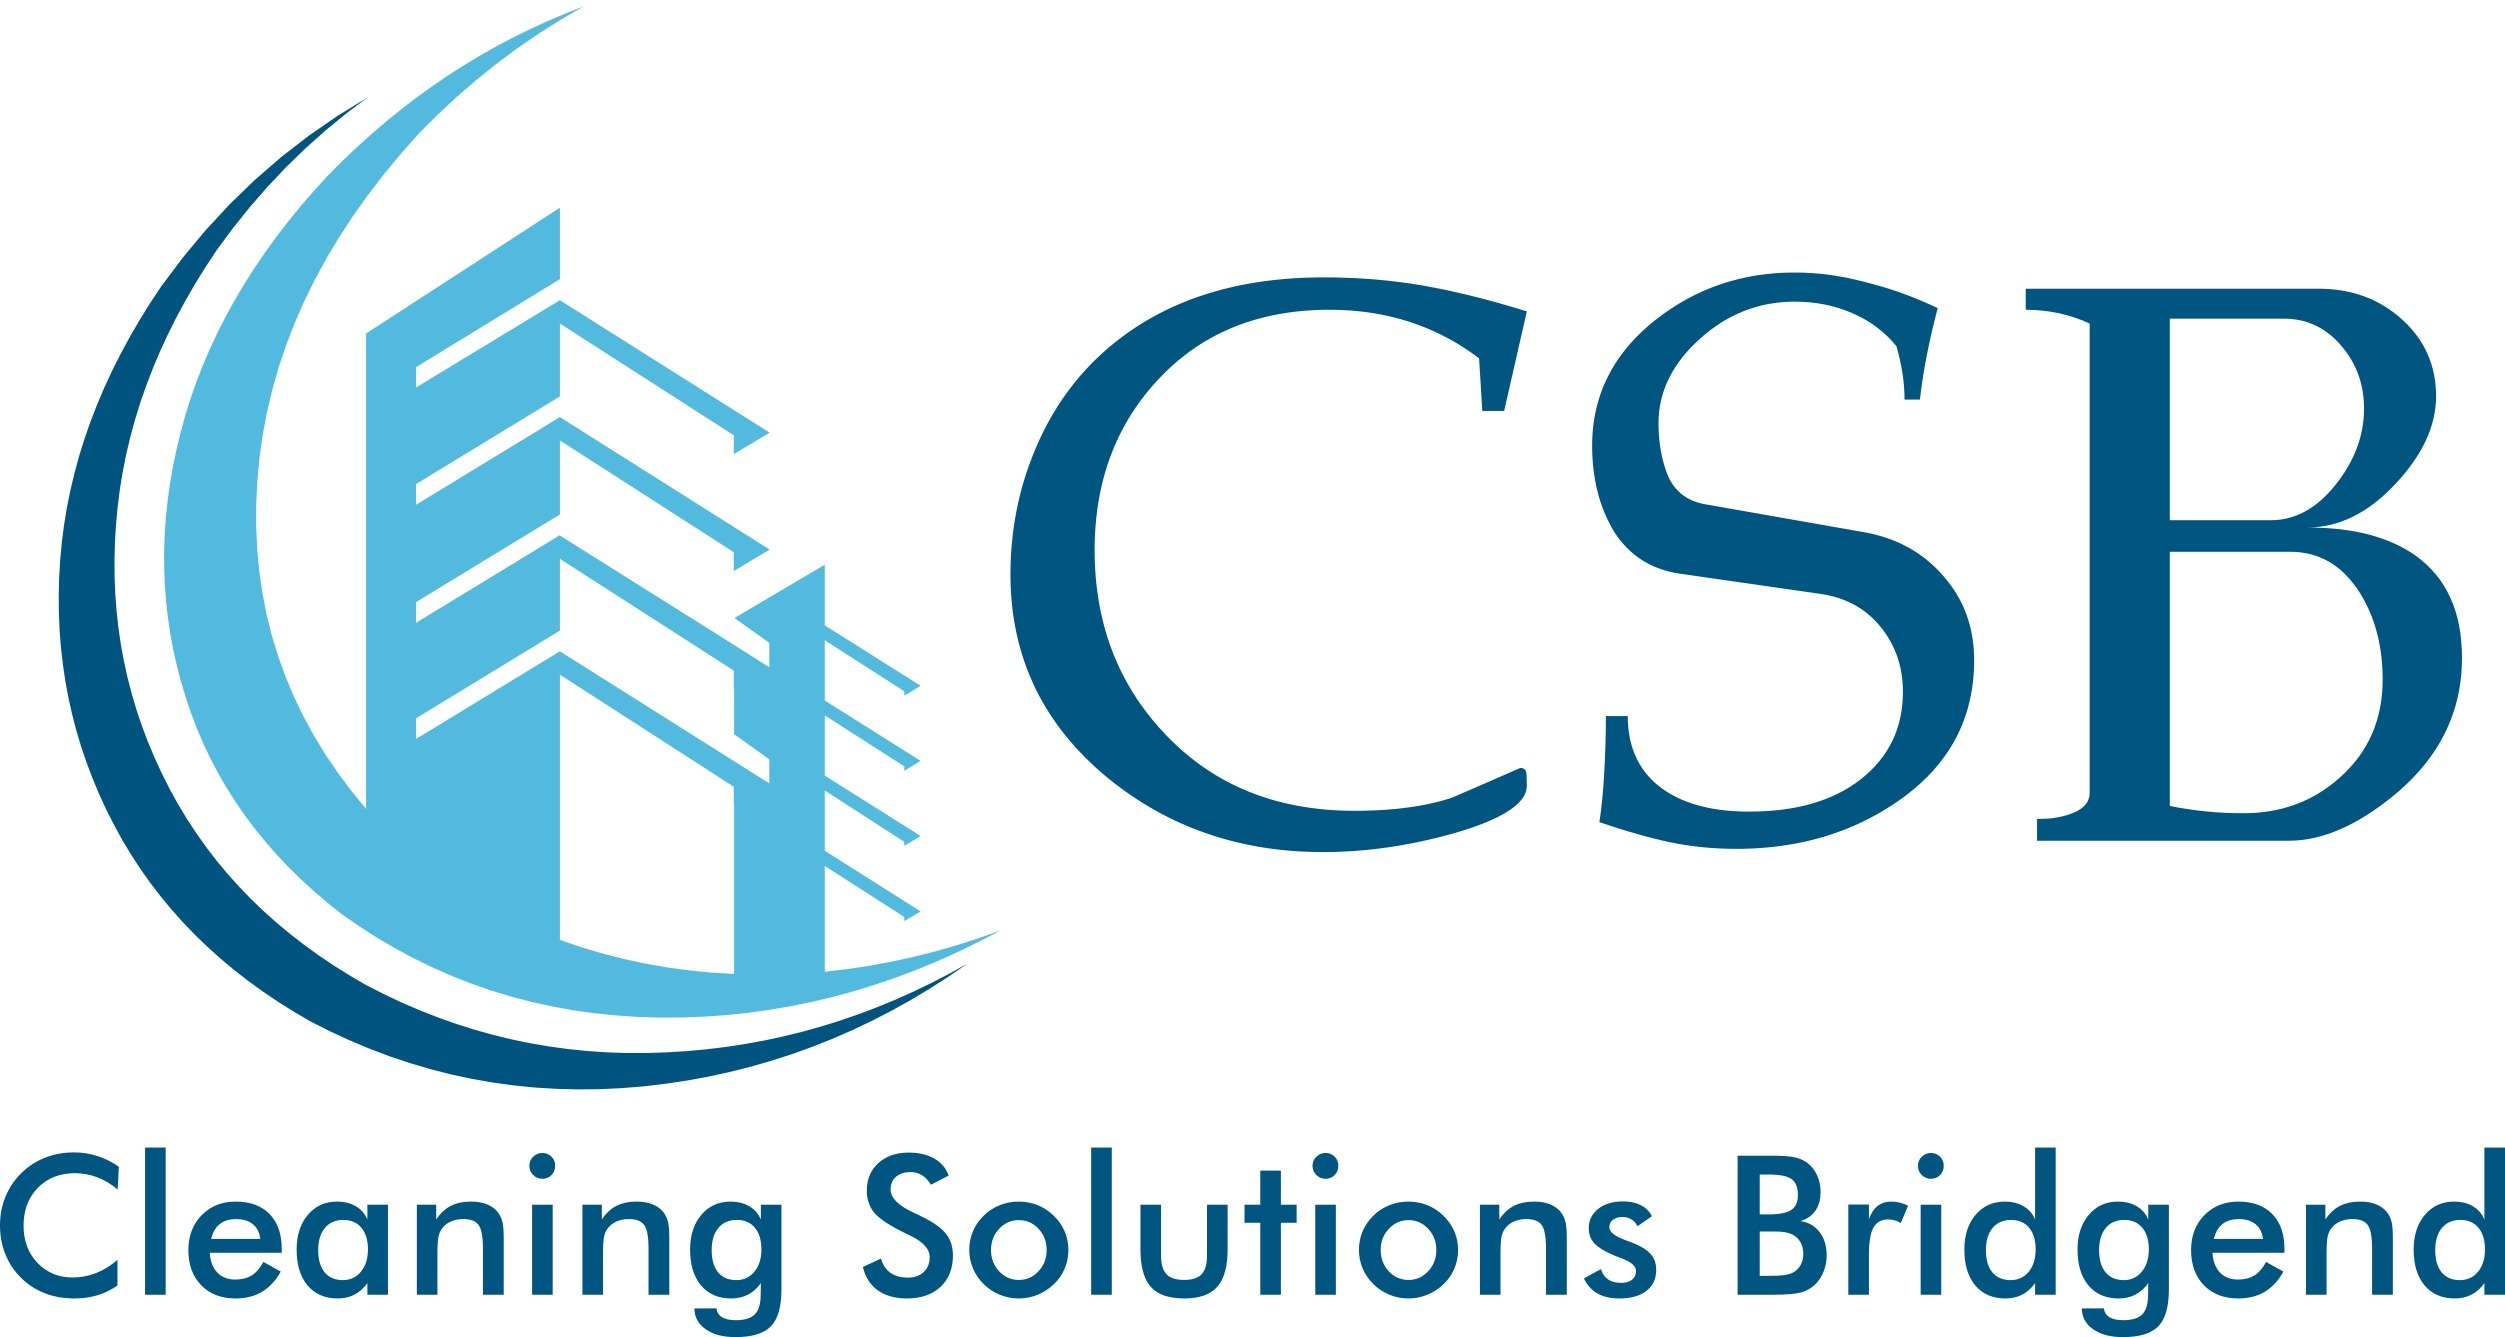 Cleaning Solutions Bridgend Ltd